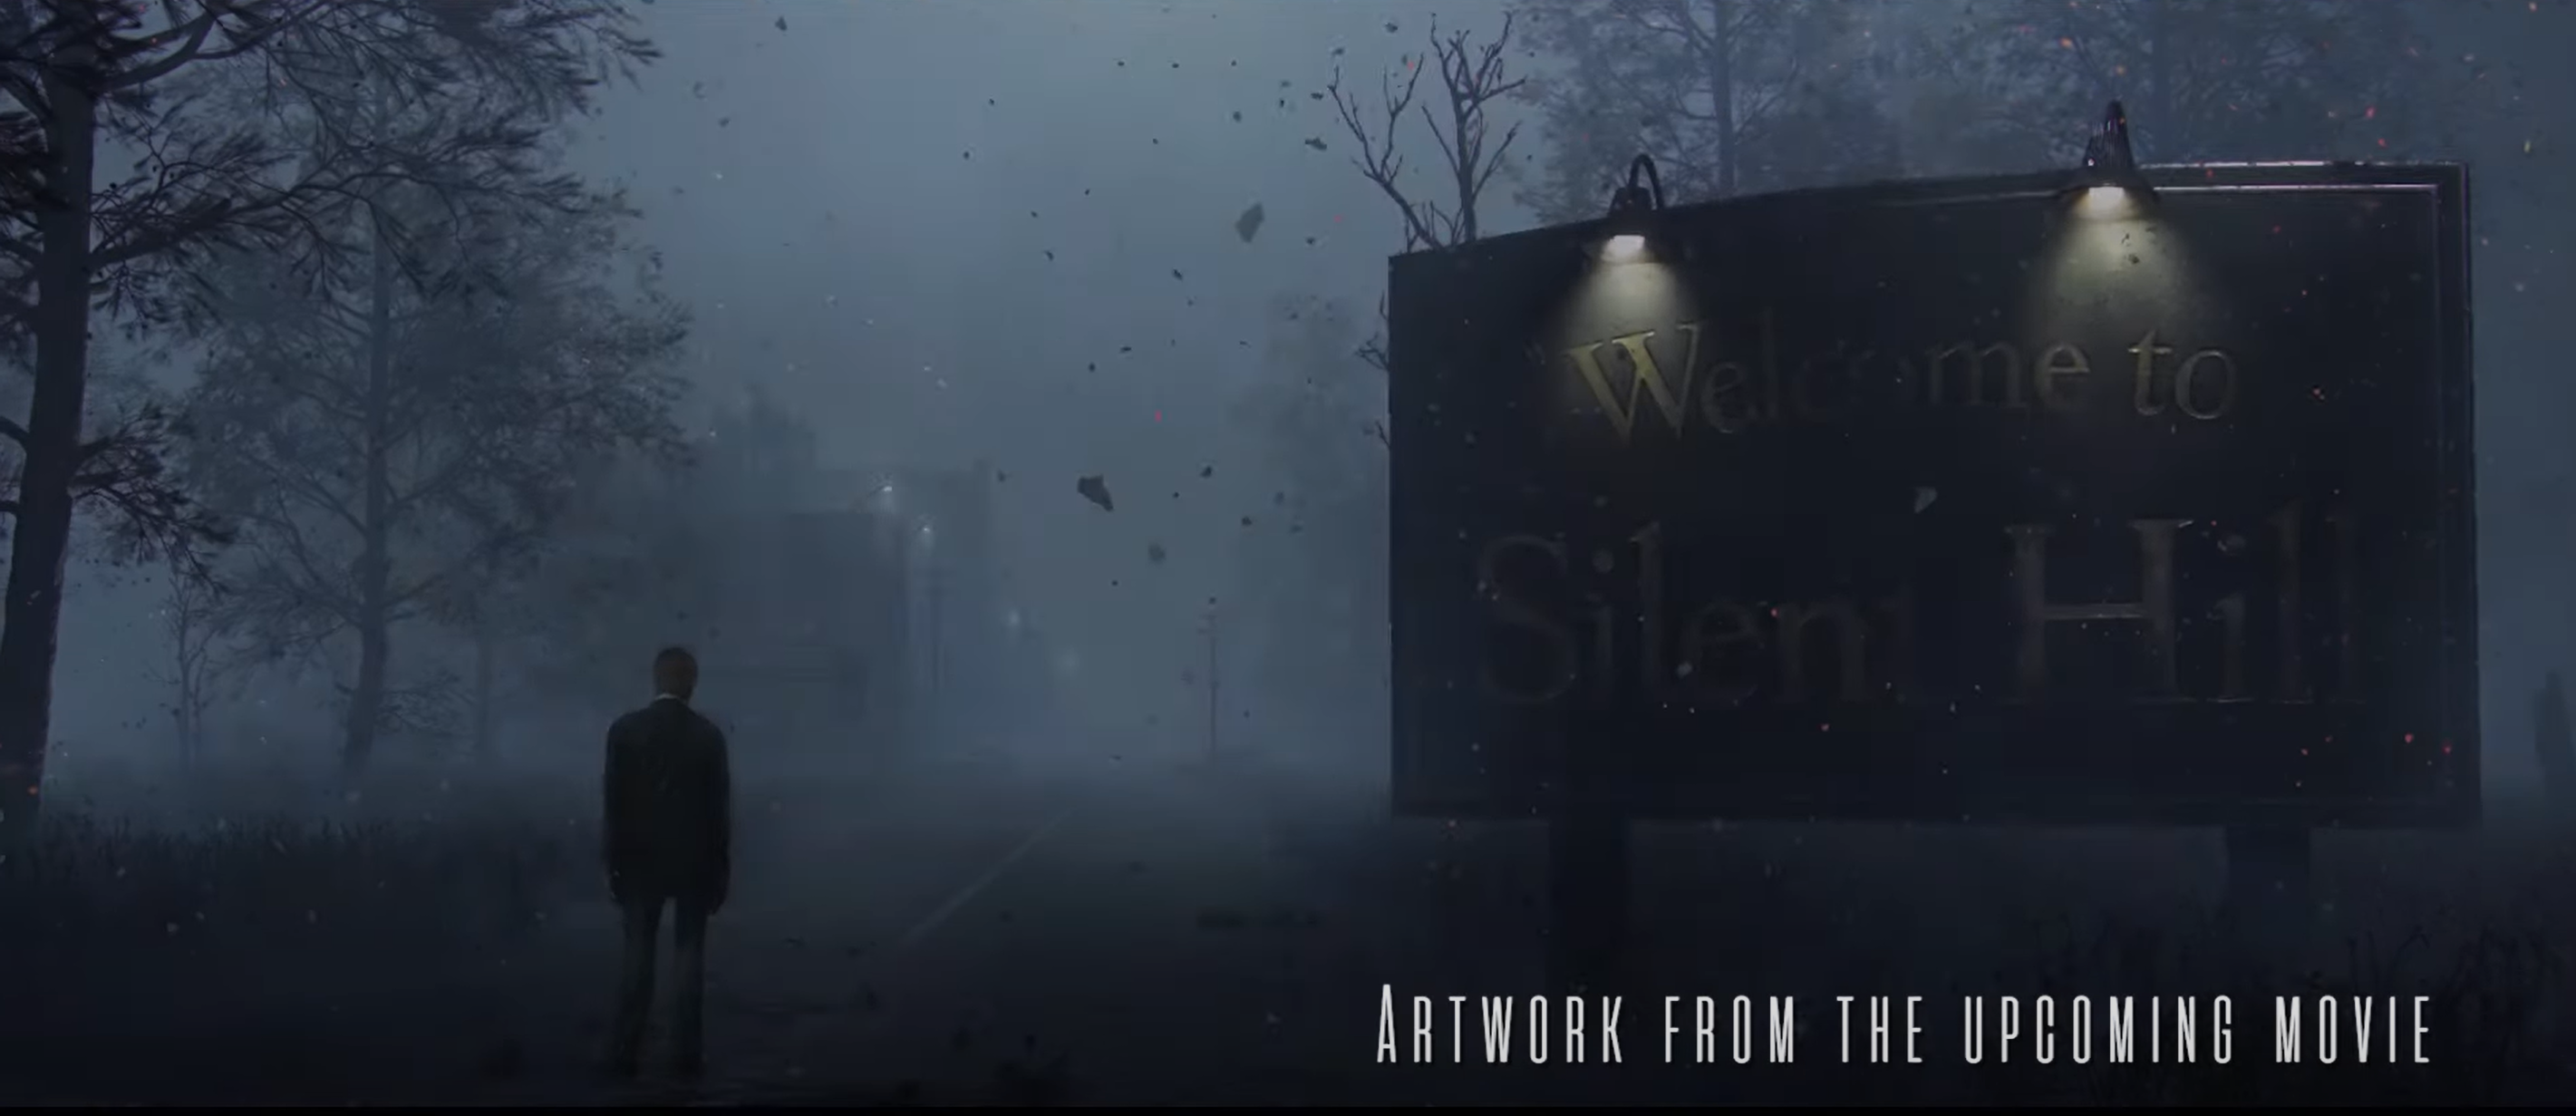 SILENT HILL: Townfall Teaser Trailer (4K:EN)